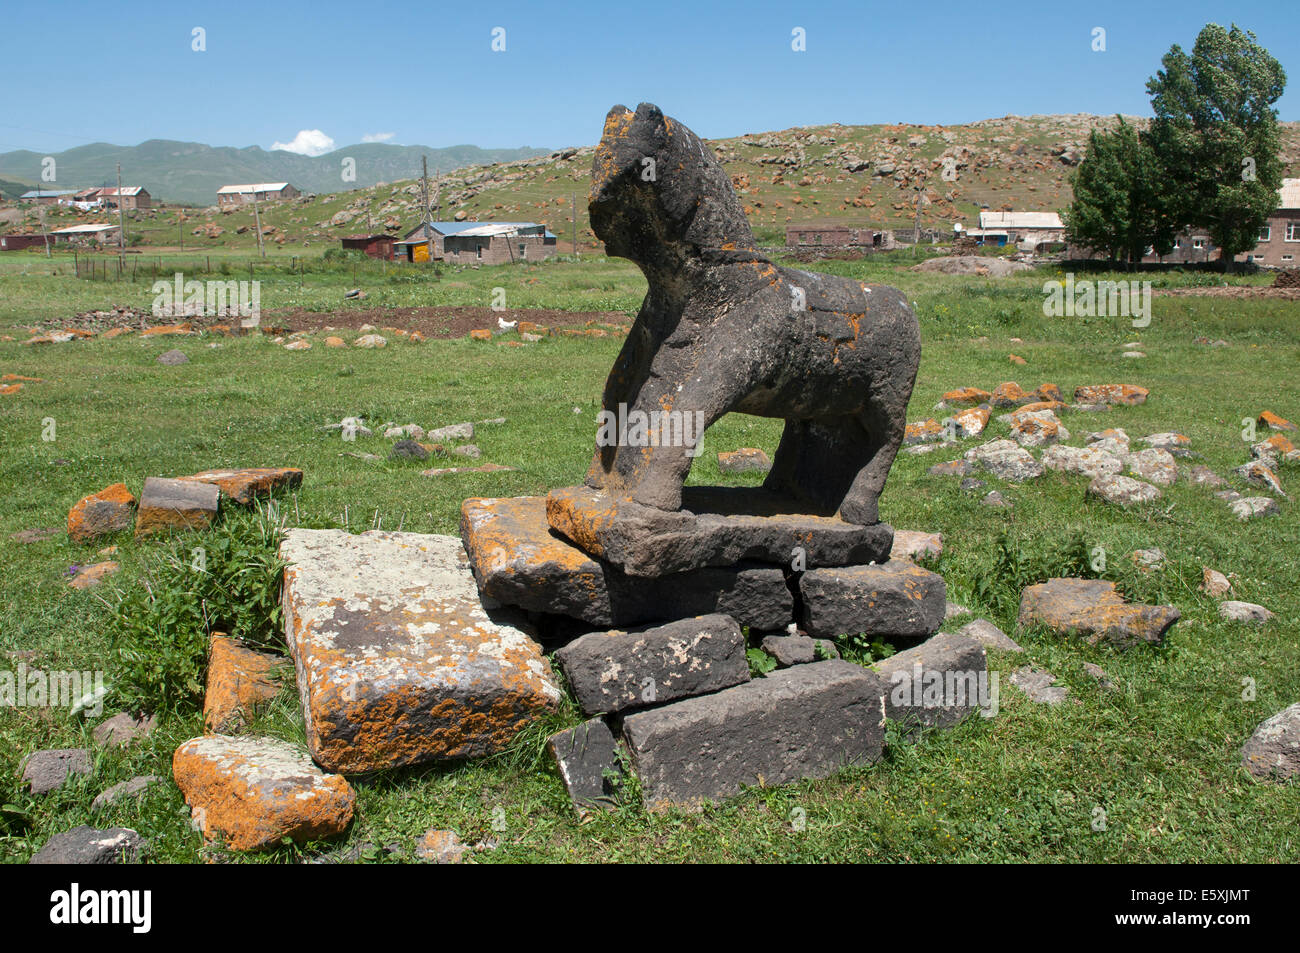 horse-statue-on-a-grave-yazidi-village-c